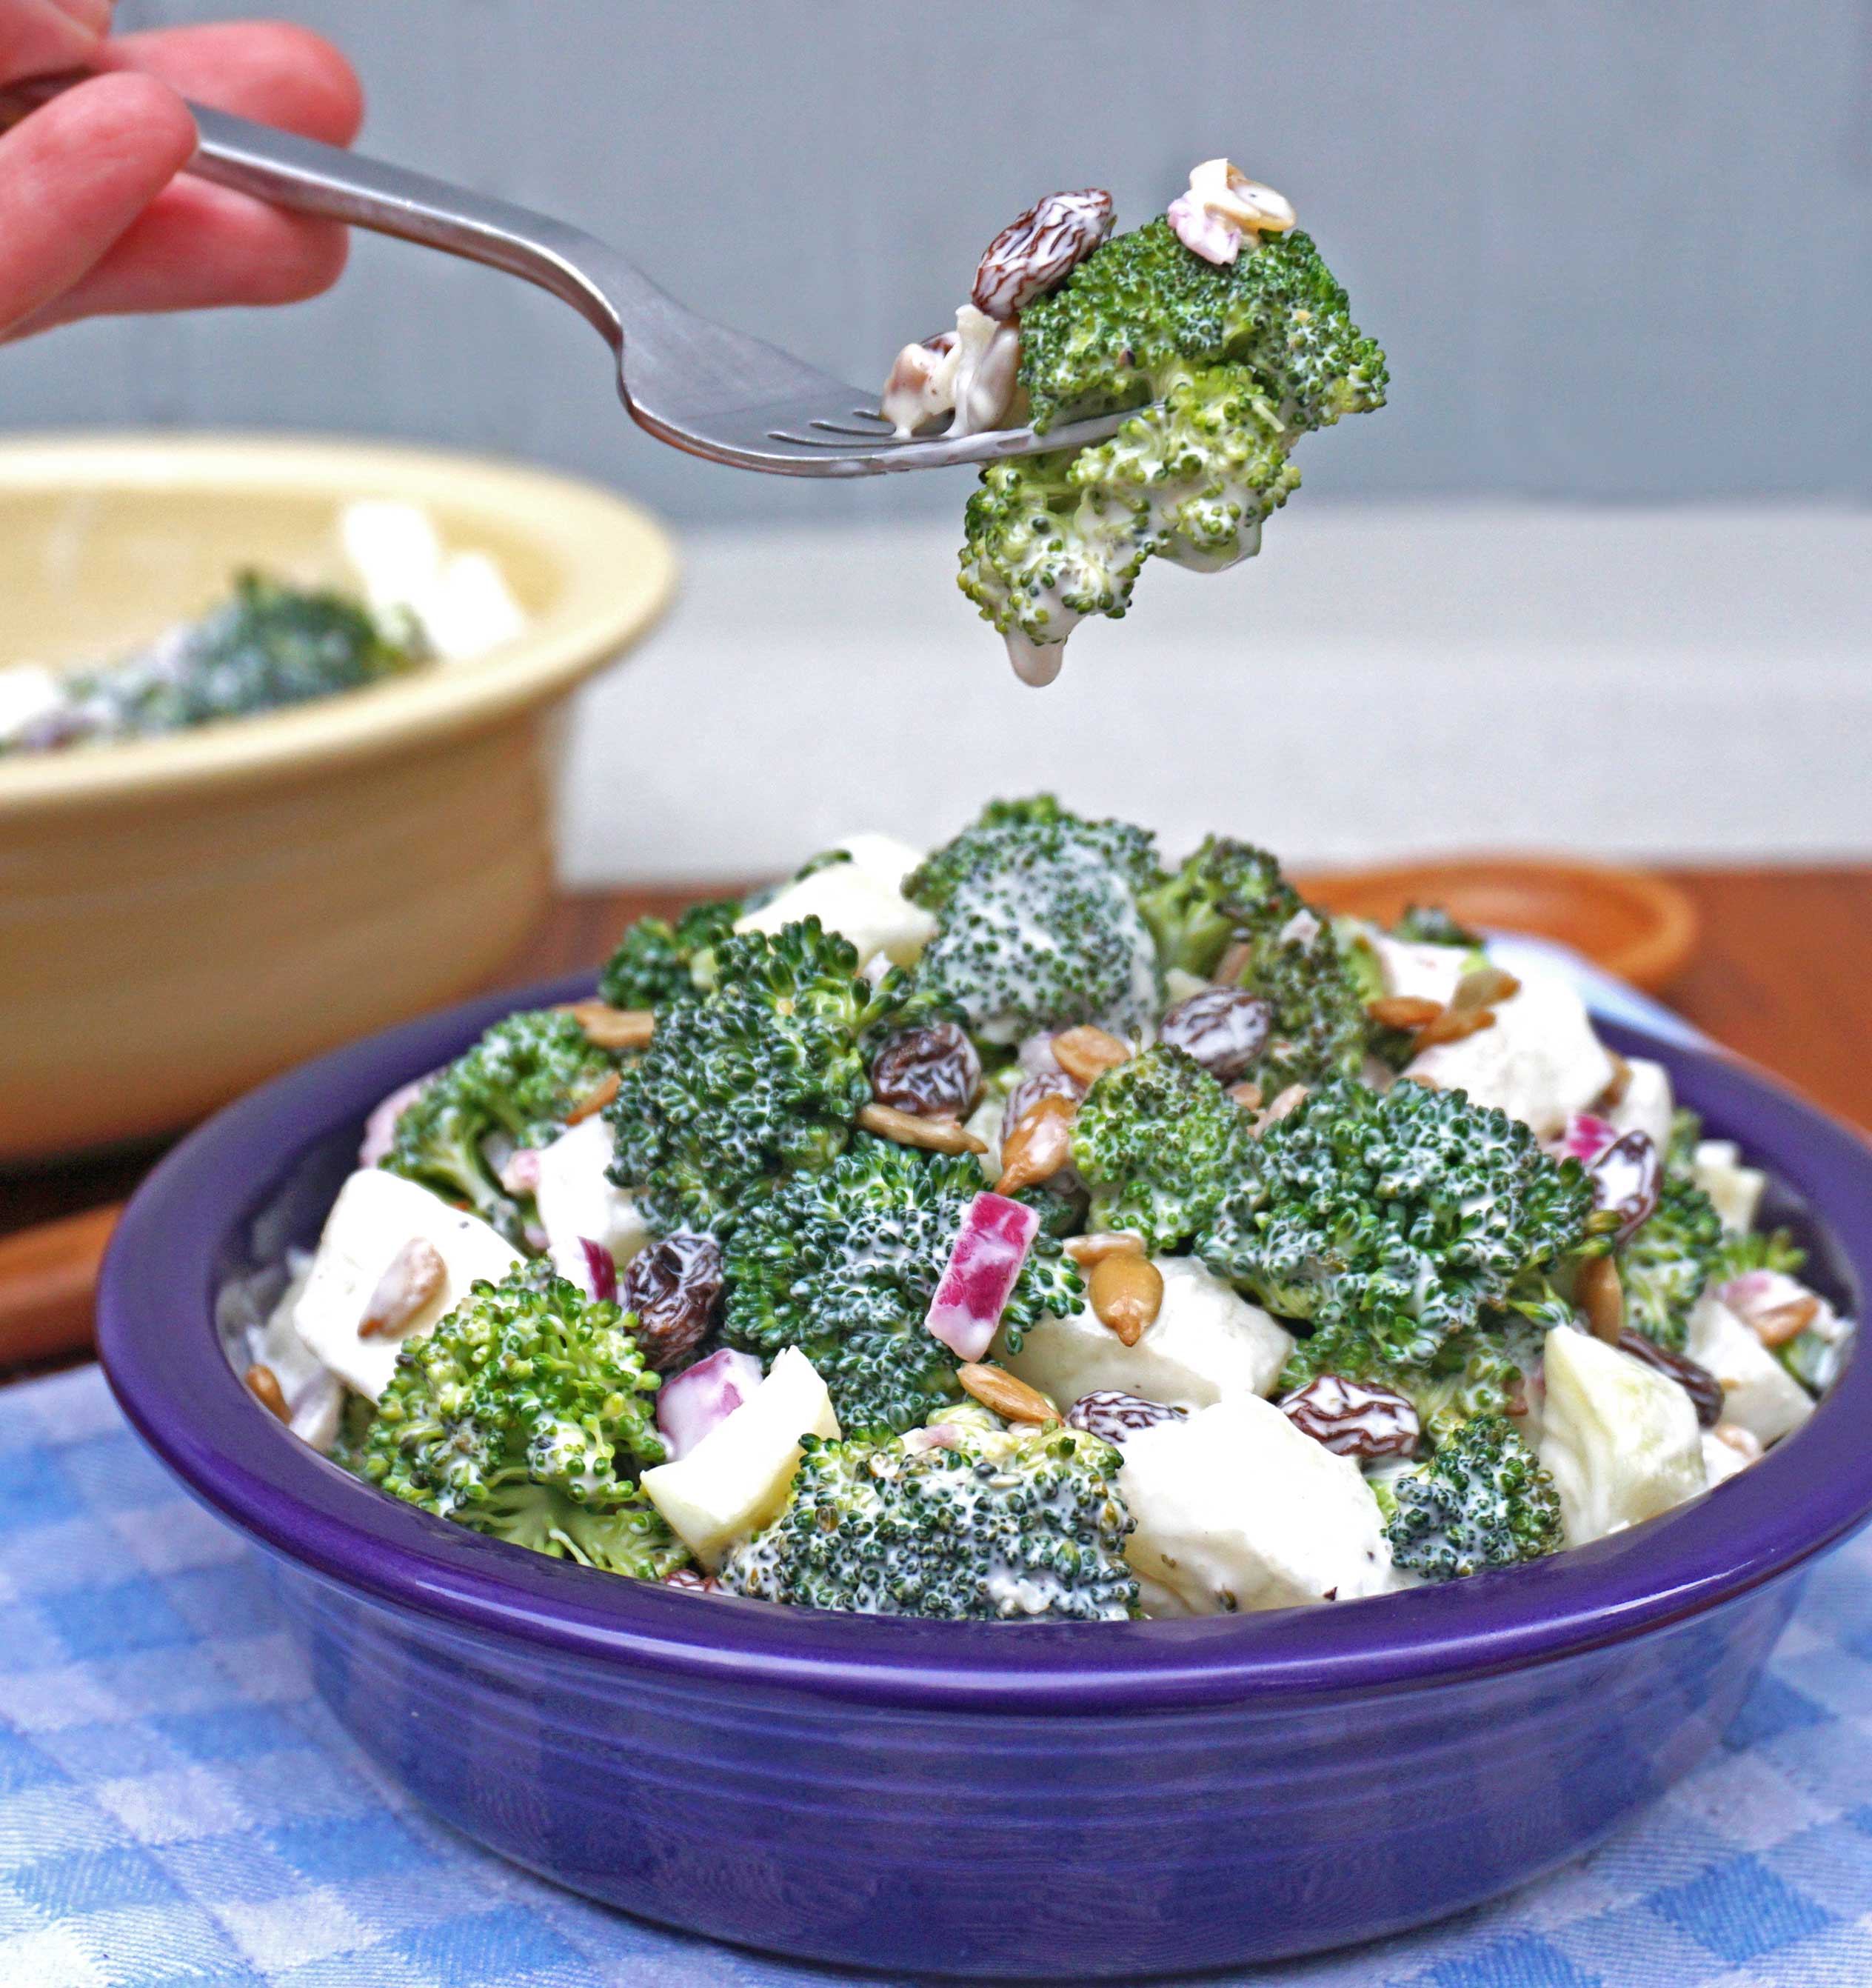 Creamy Broccoli and Cucumber Salad with Raisins and Sunflower Seeds